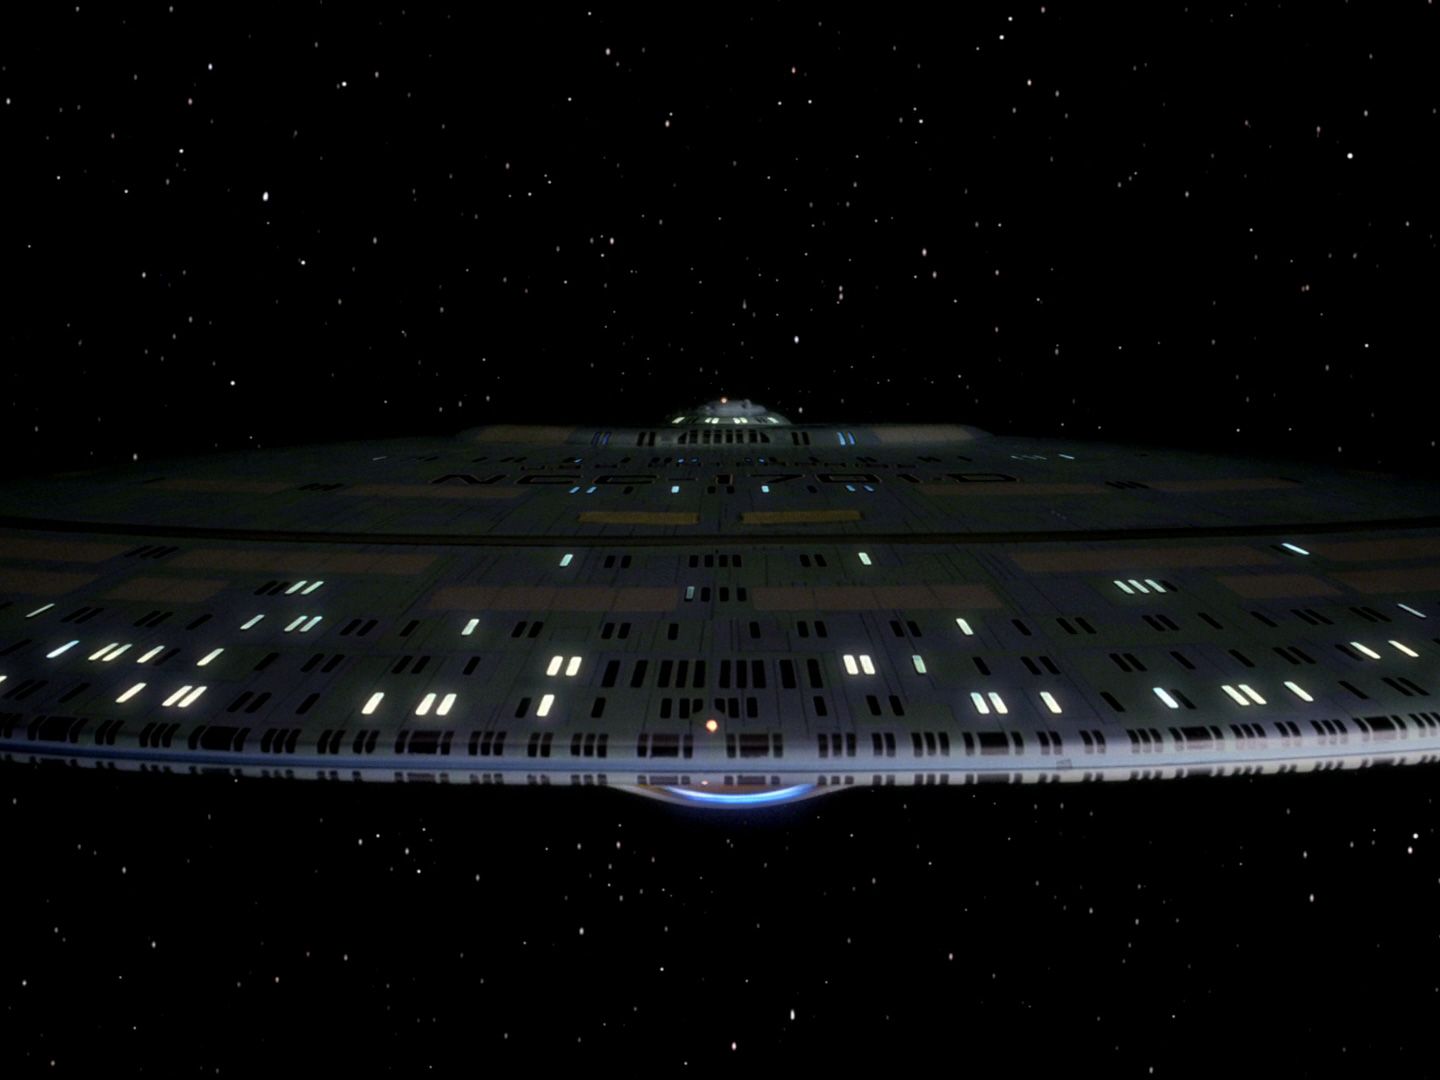 A close up of Enterprise’s saucer section.